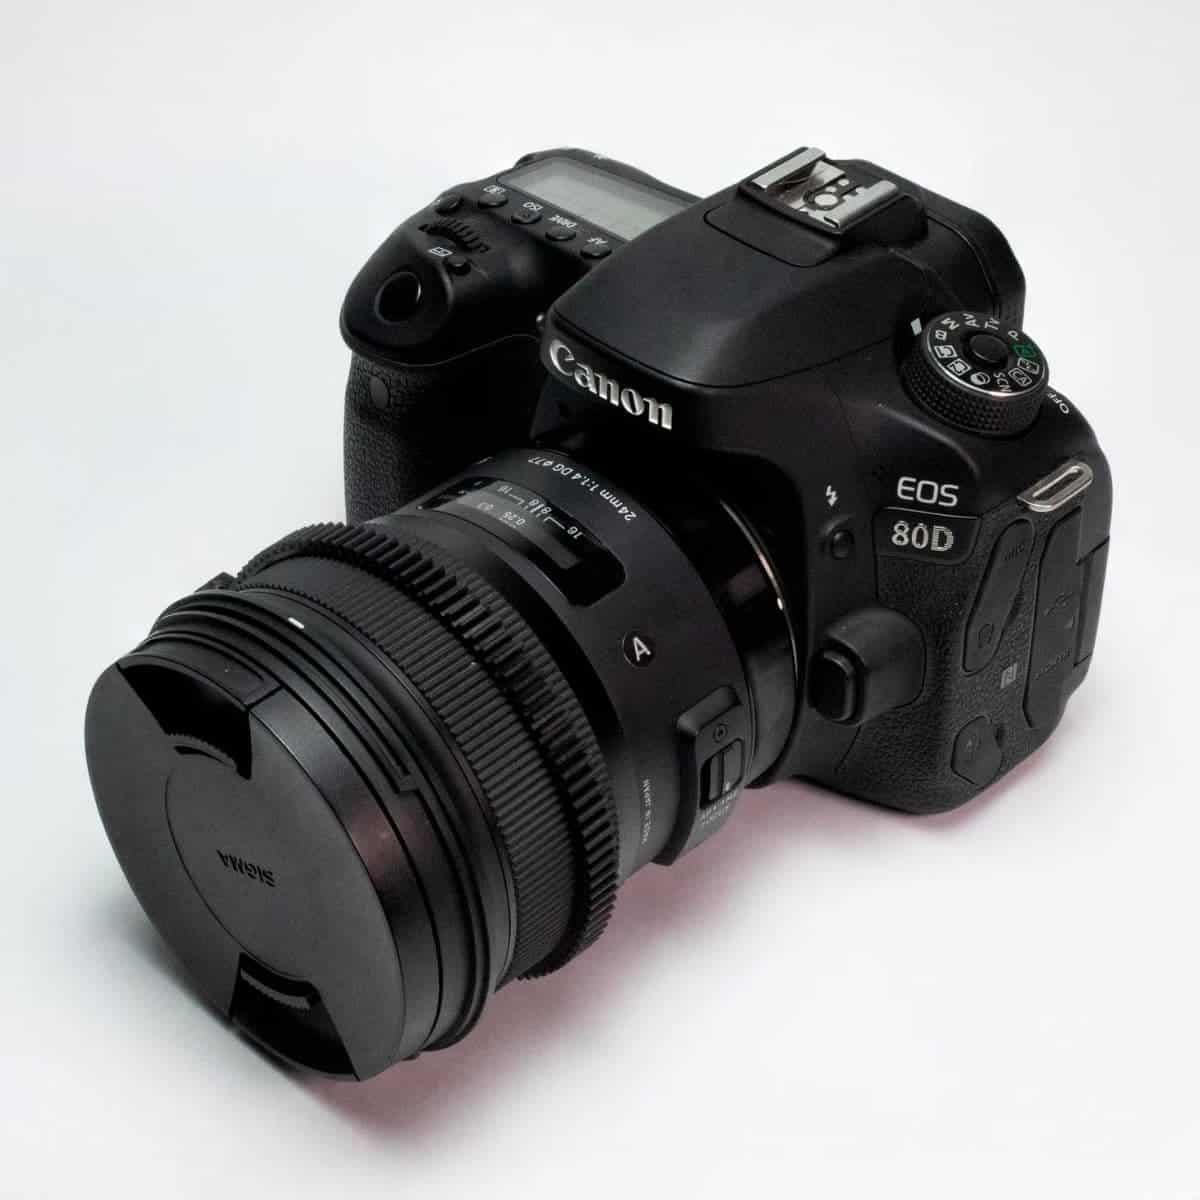 Sigma Art lens on a Canon DSLR camera.